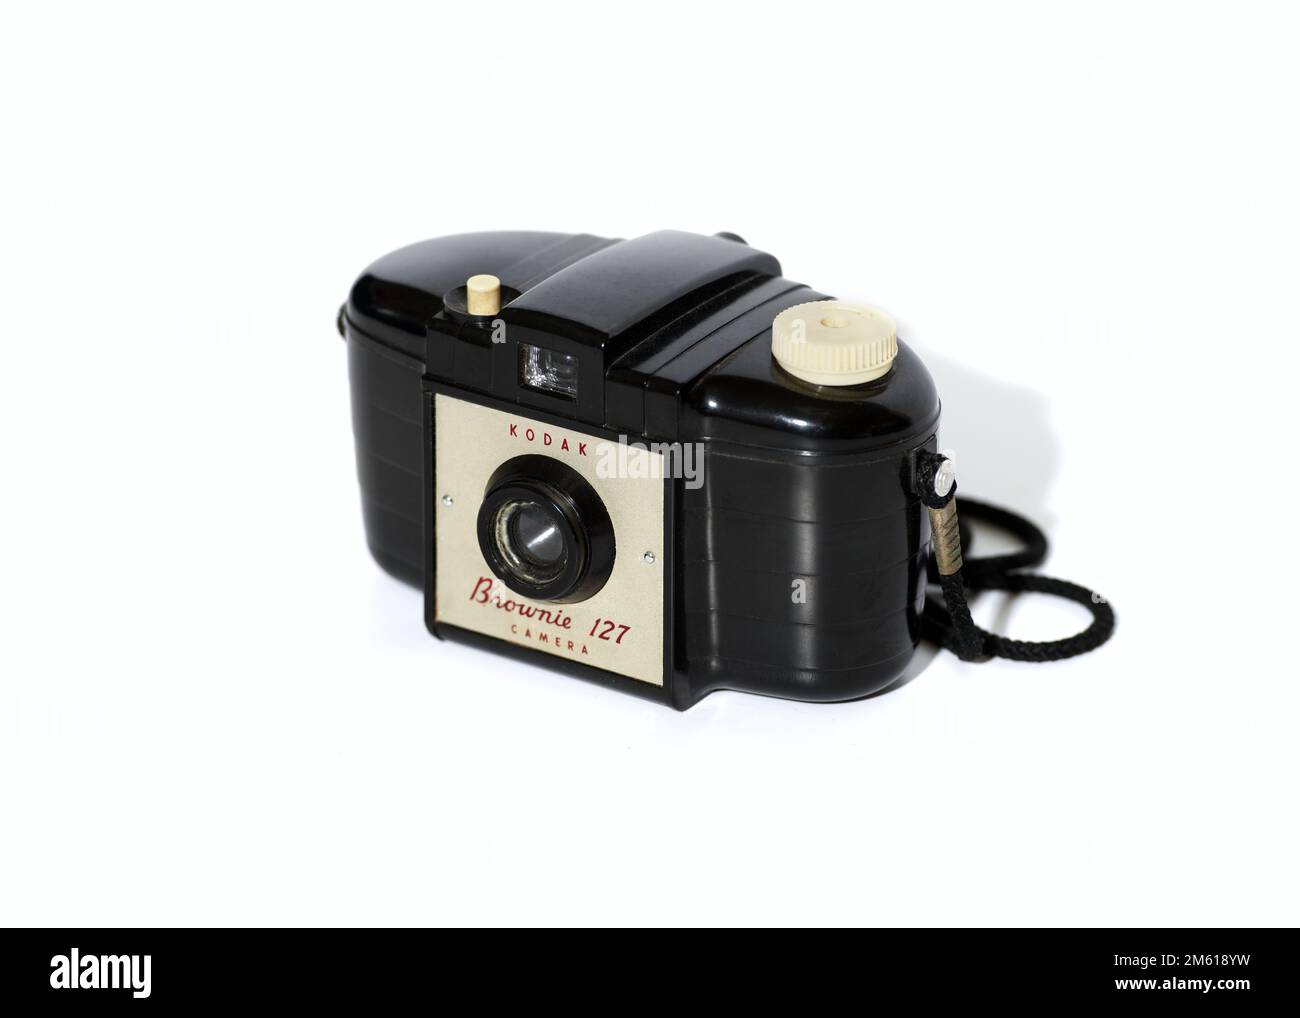 Kodak Brownie 127 camera against white background Stock Photo